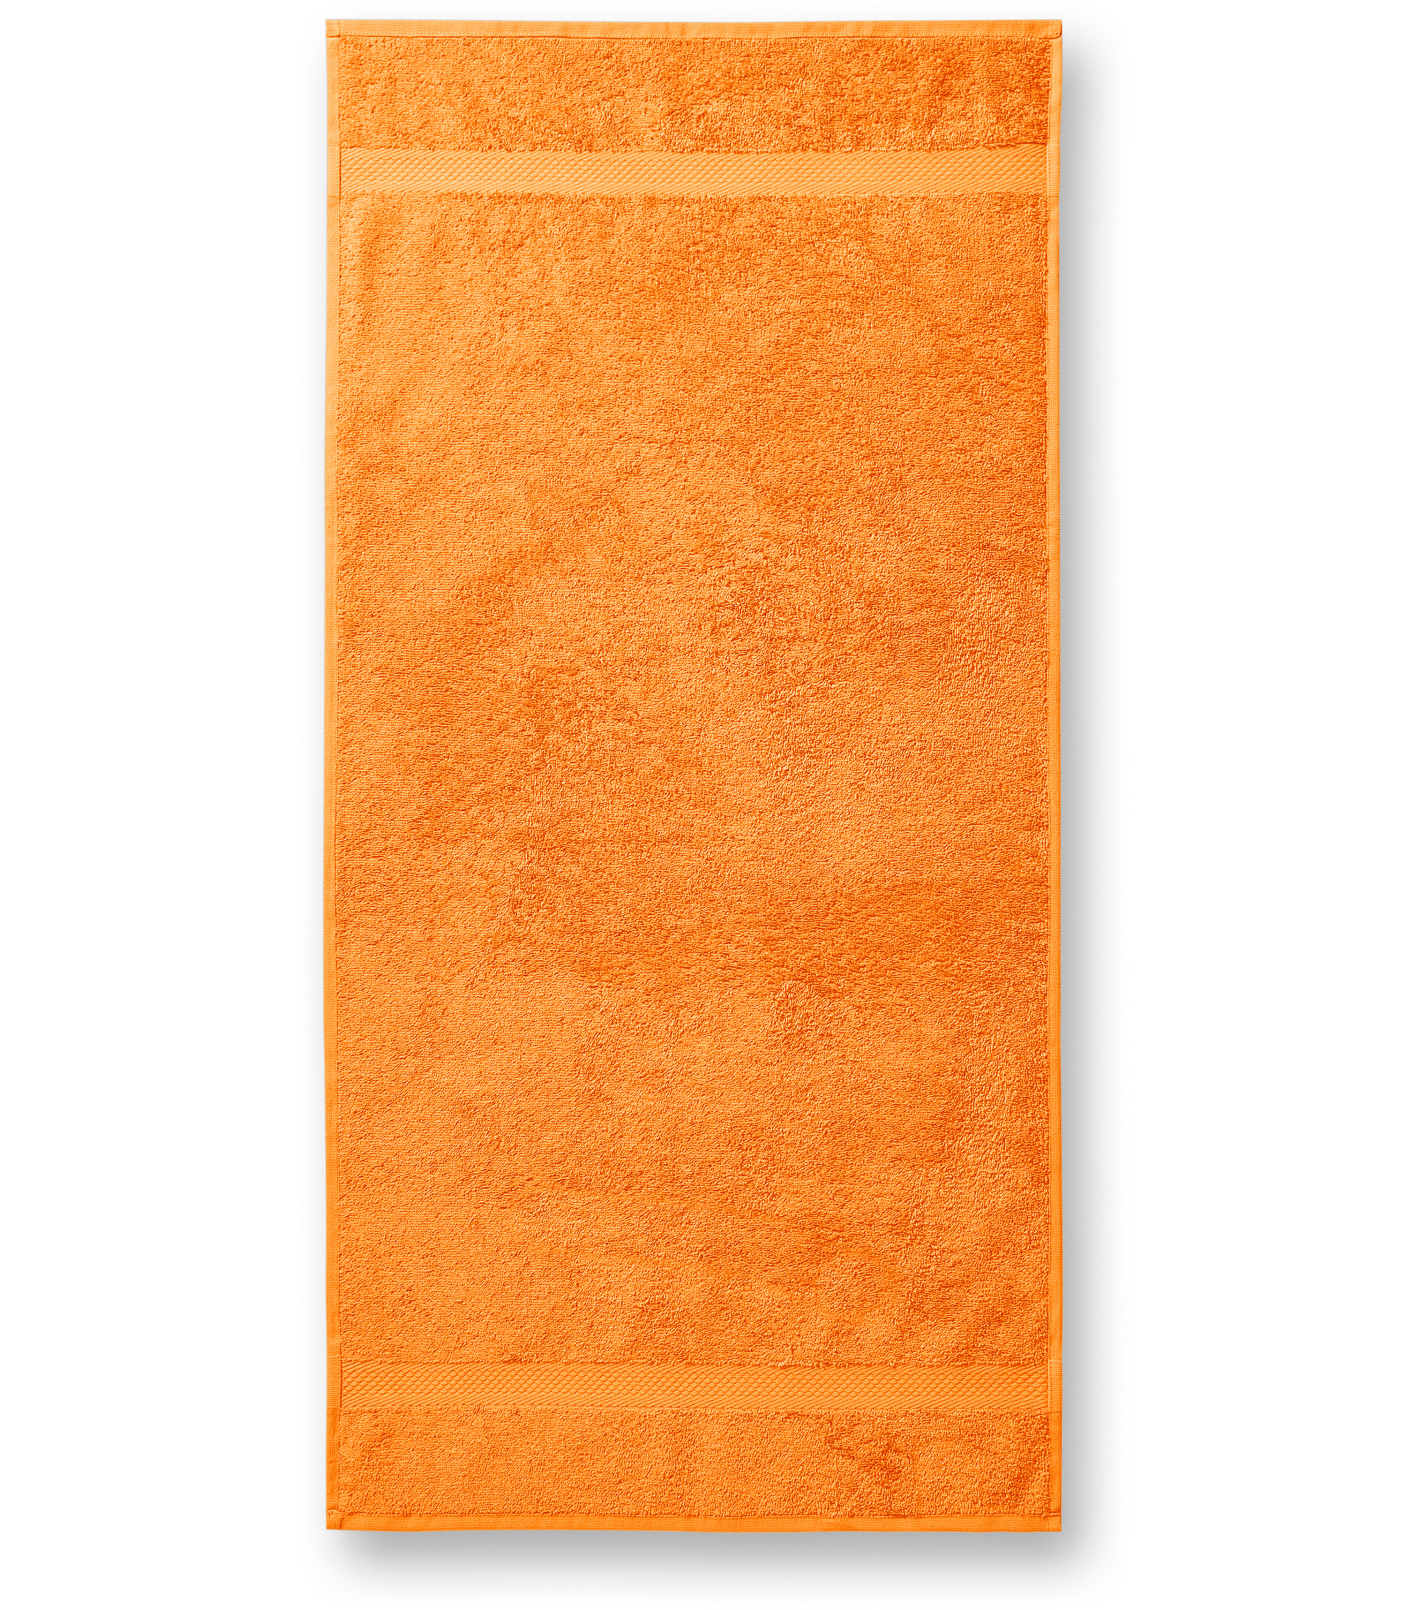 A2 - Tangerine orange (300.00 Kč)